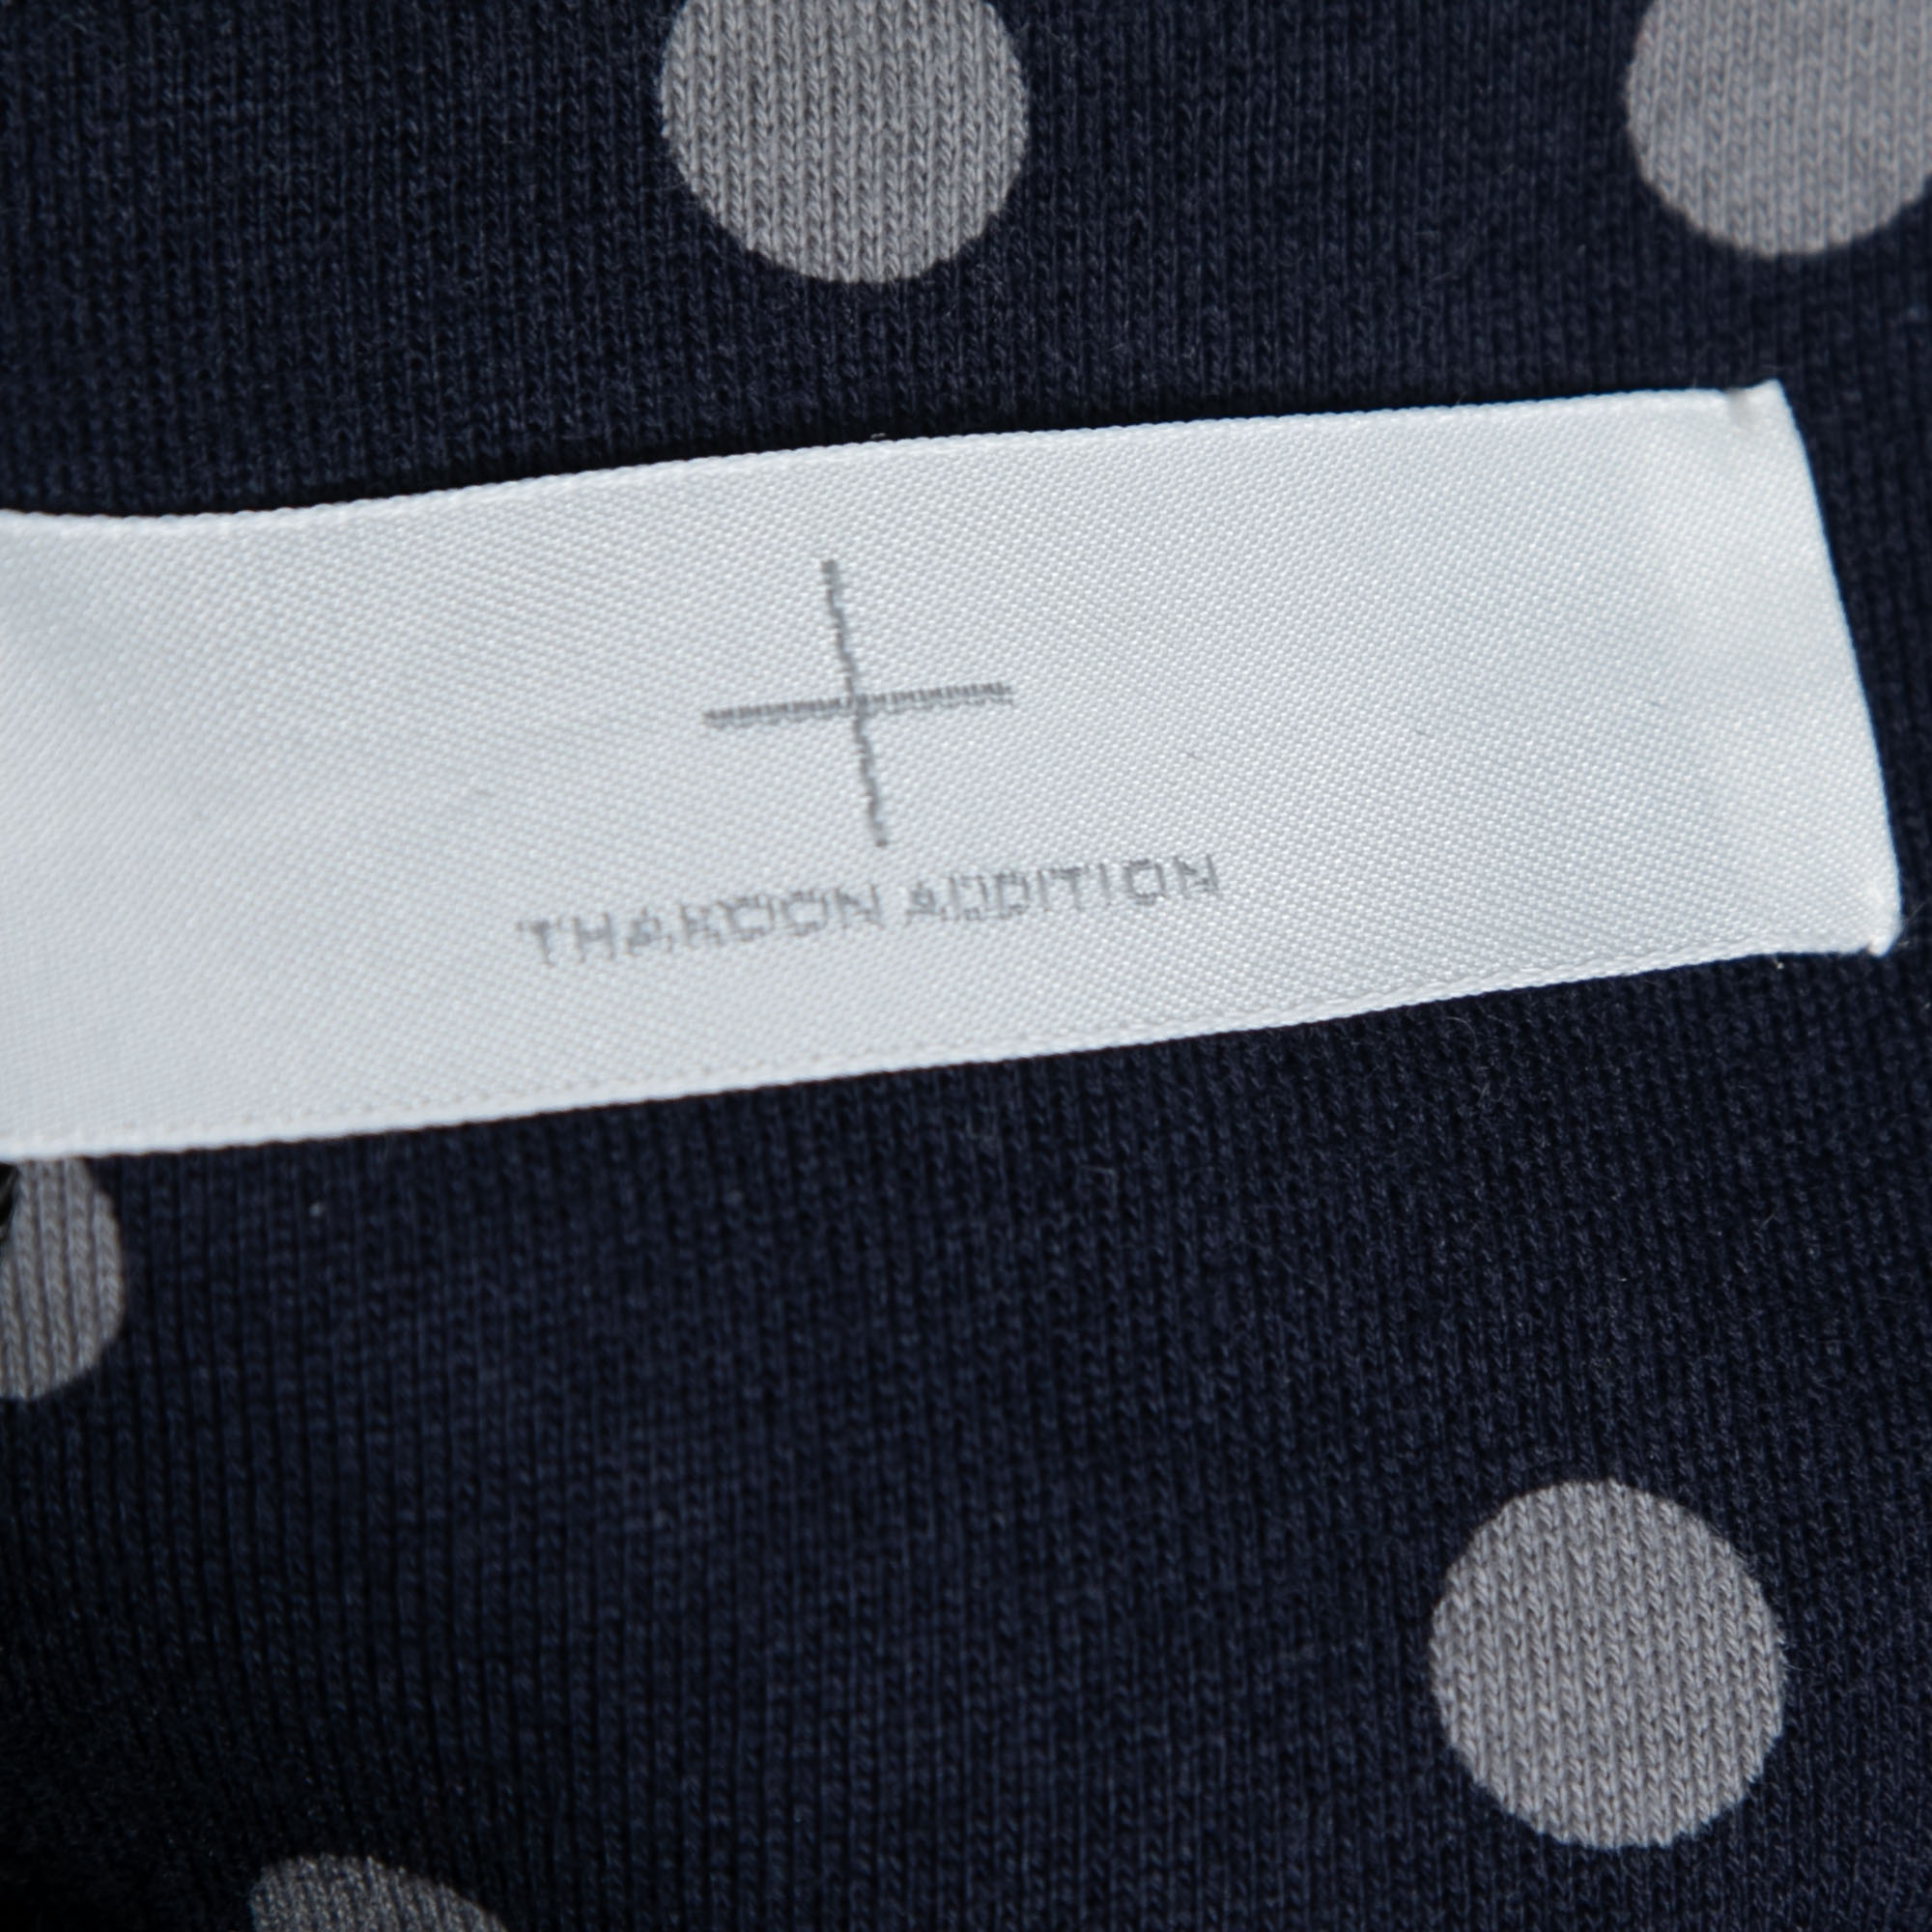 Thakoon Addition Navy Blue And White Polka Dot Cotton Sleeveless Flared Dress XS